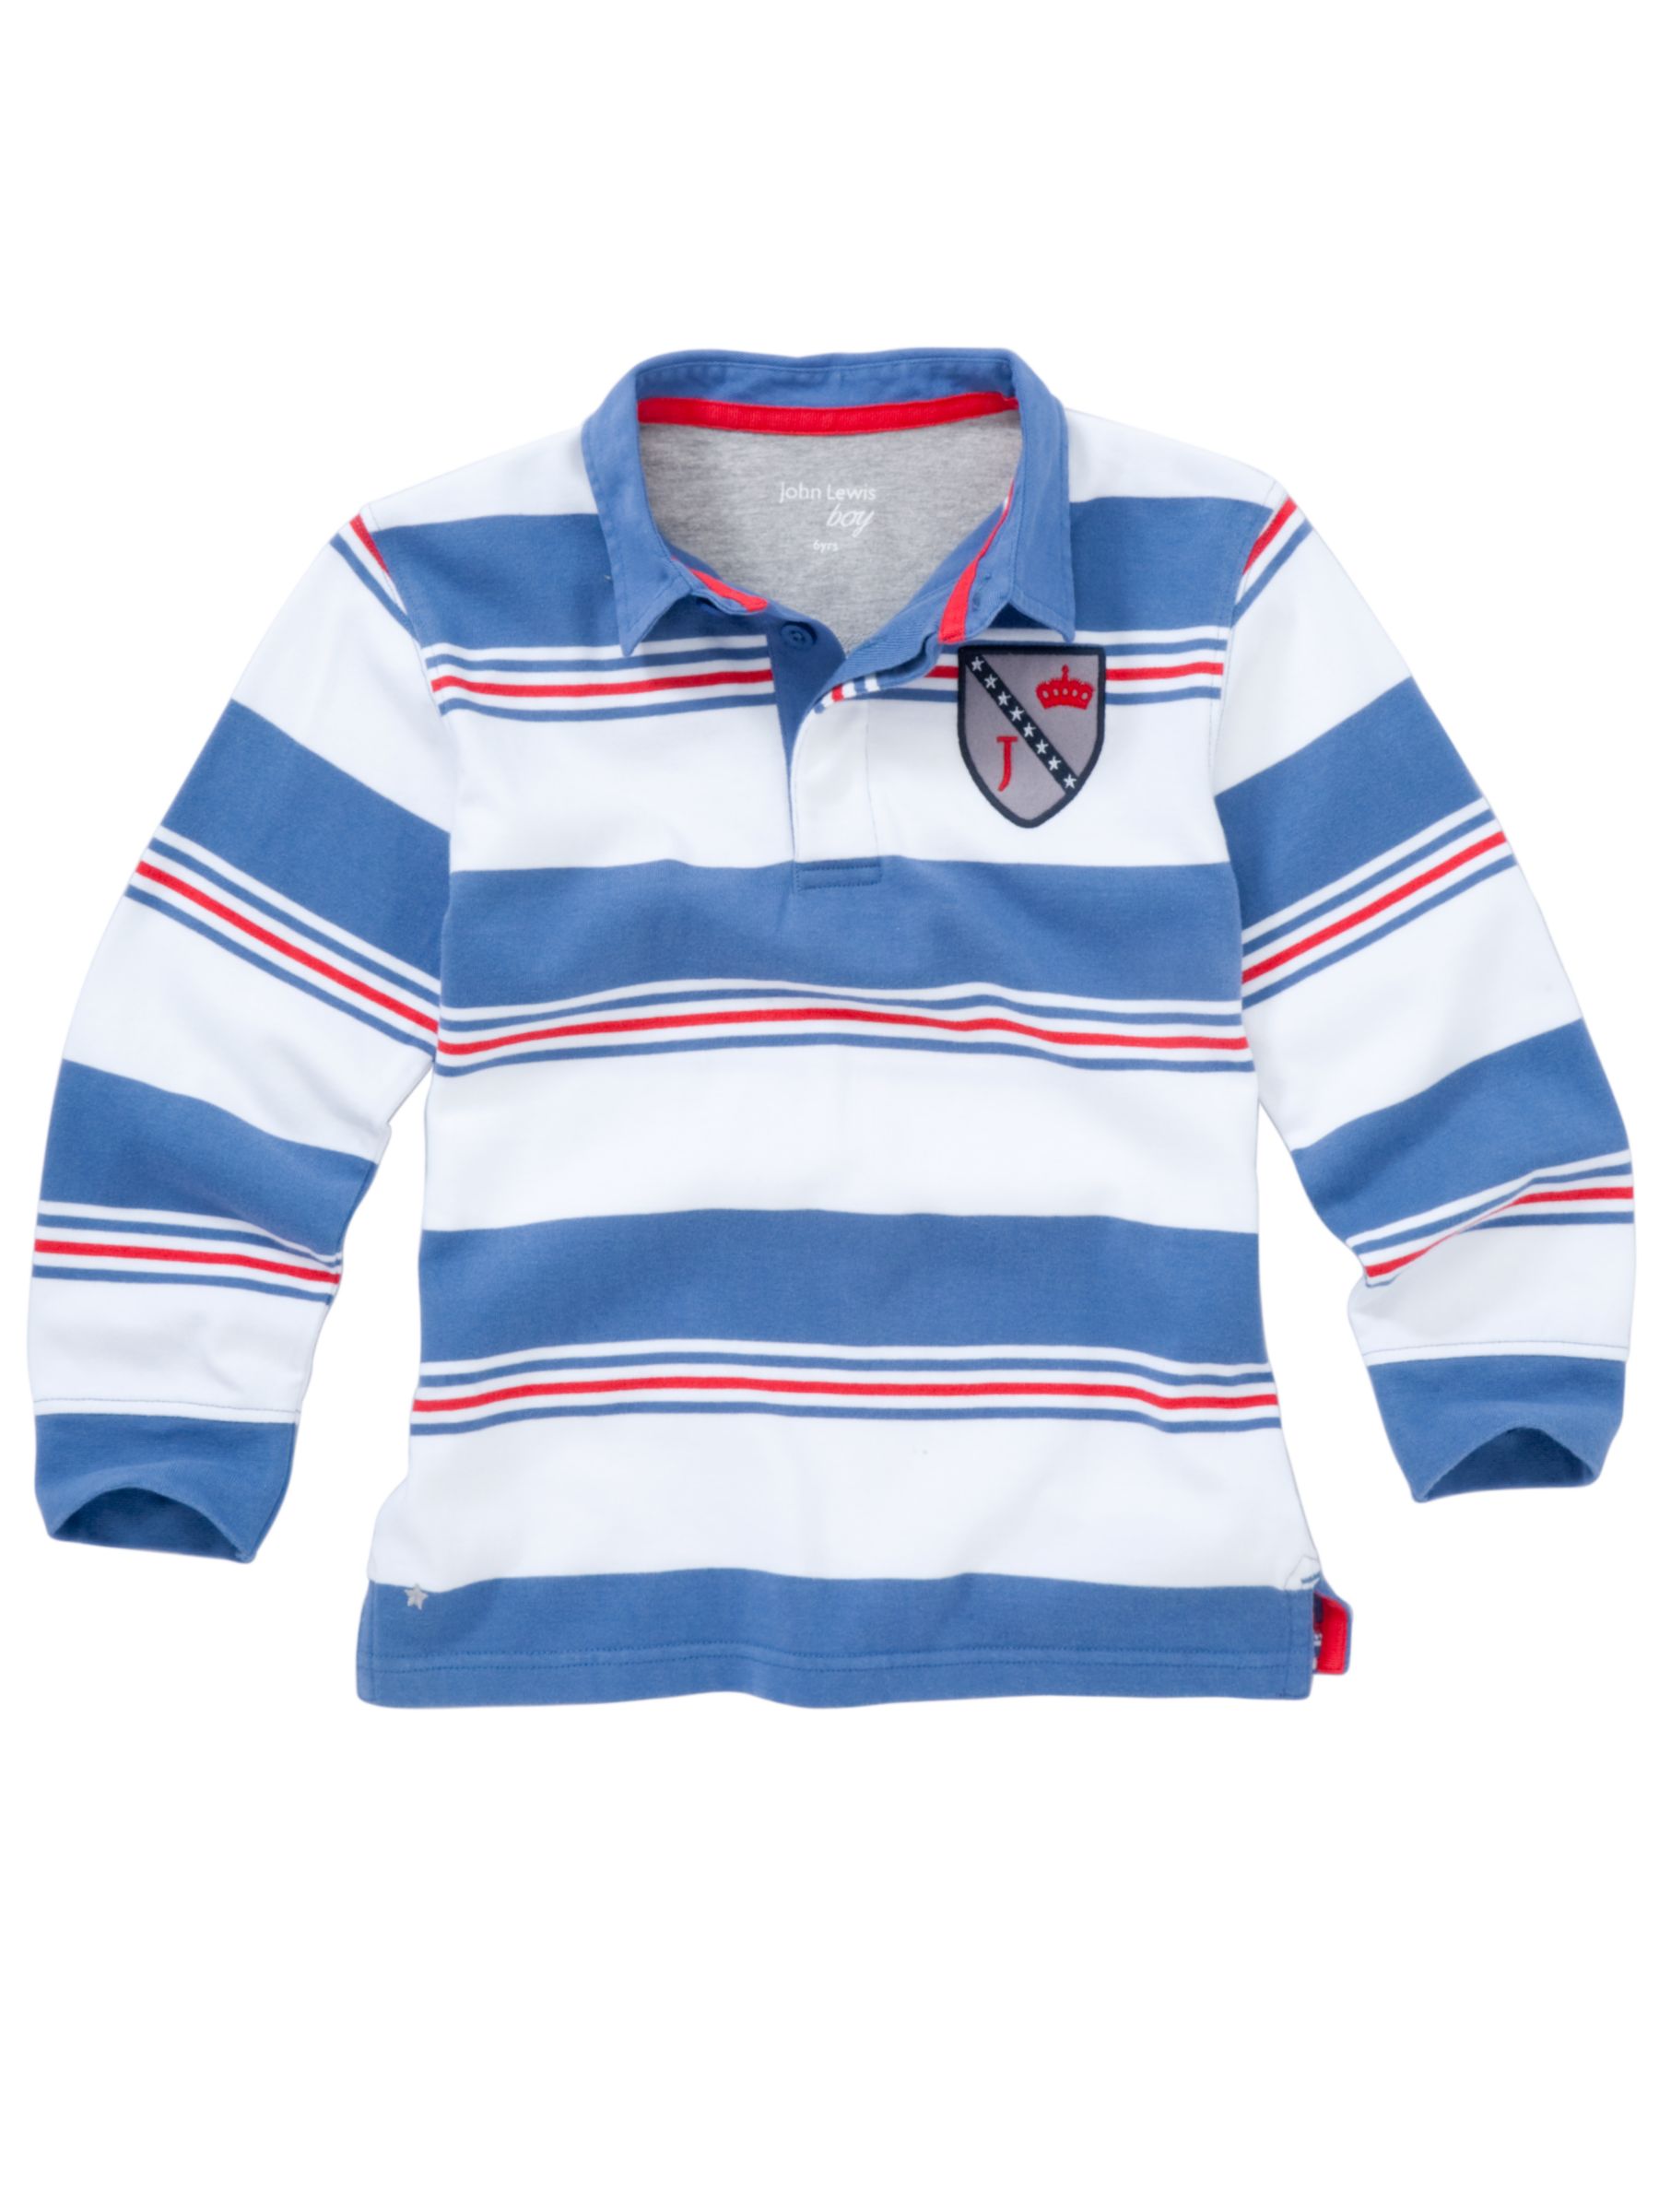 Stripe Print Rugby Shirt,